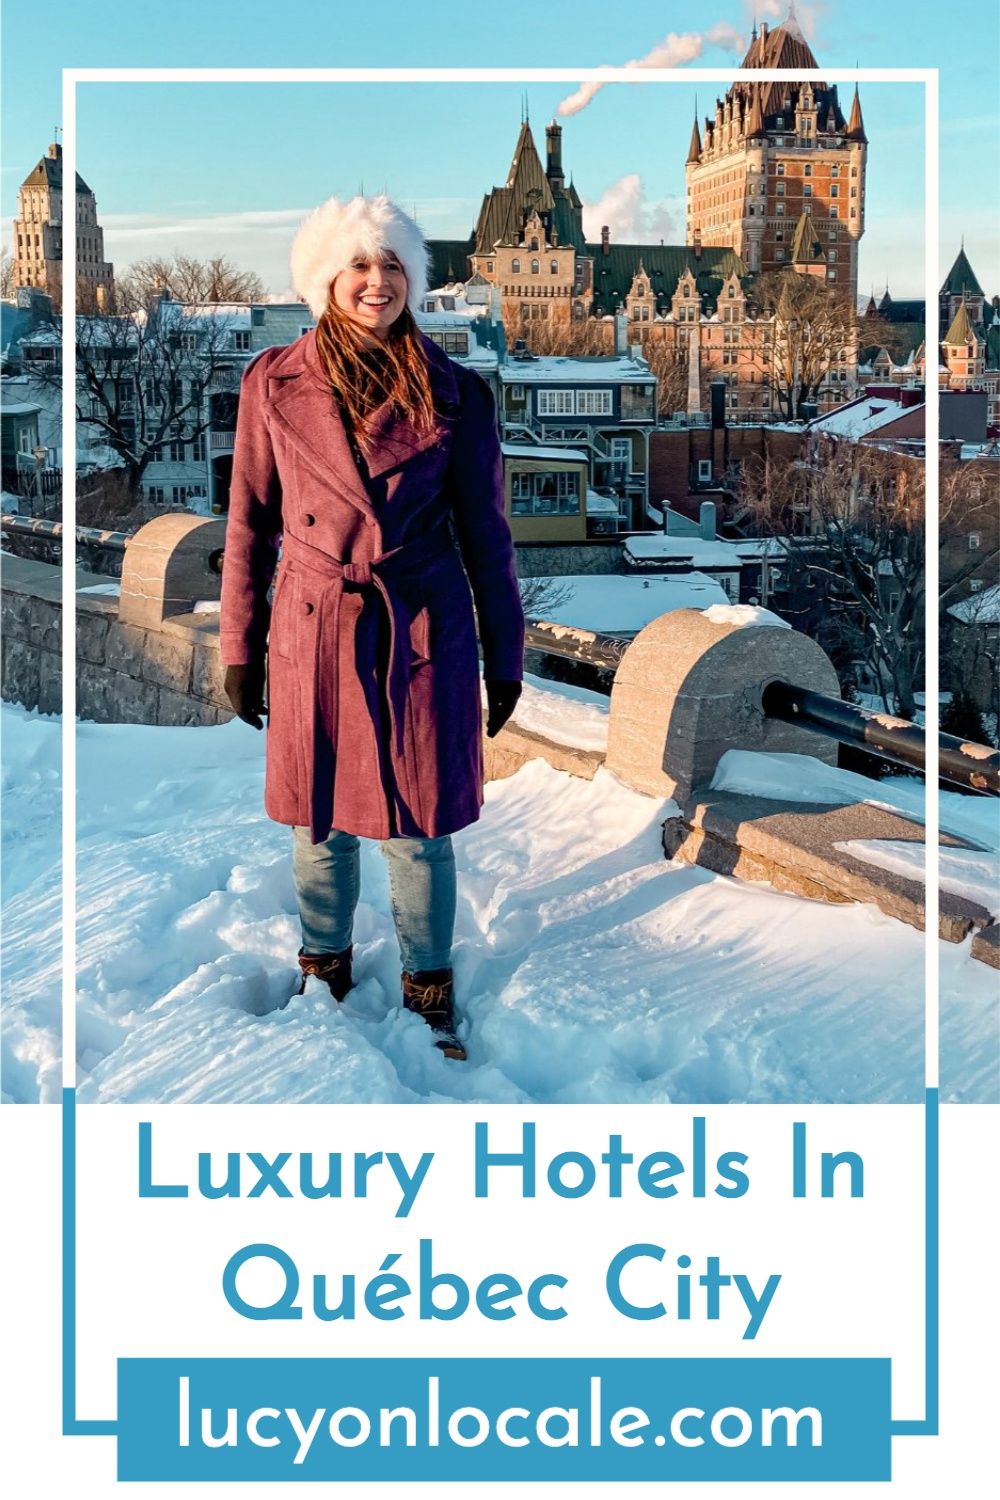 Luxury Hotels in Canada